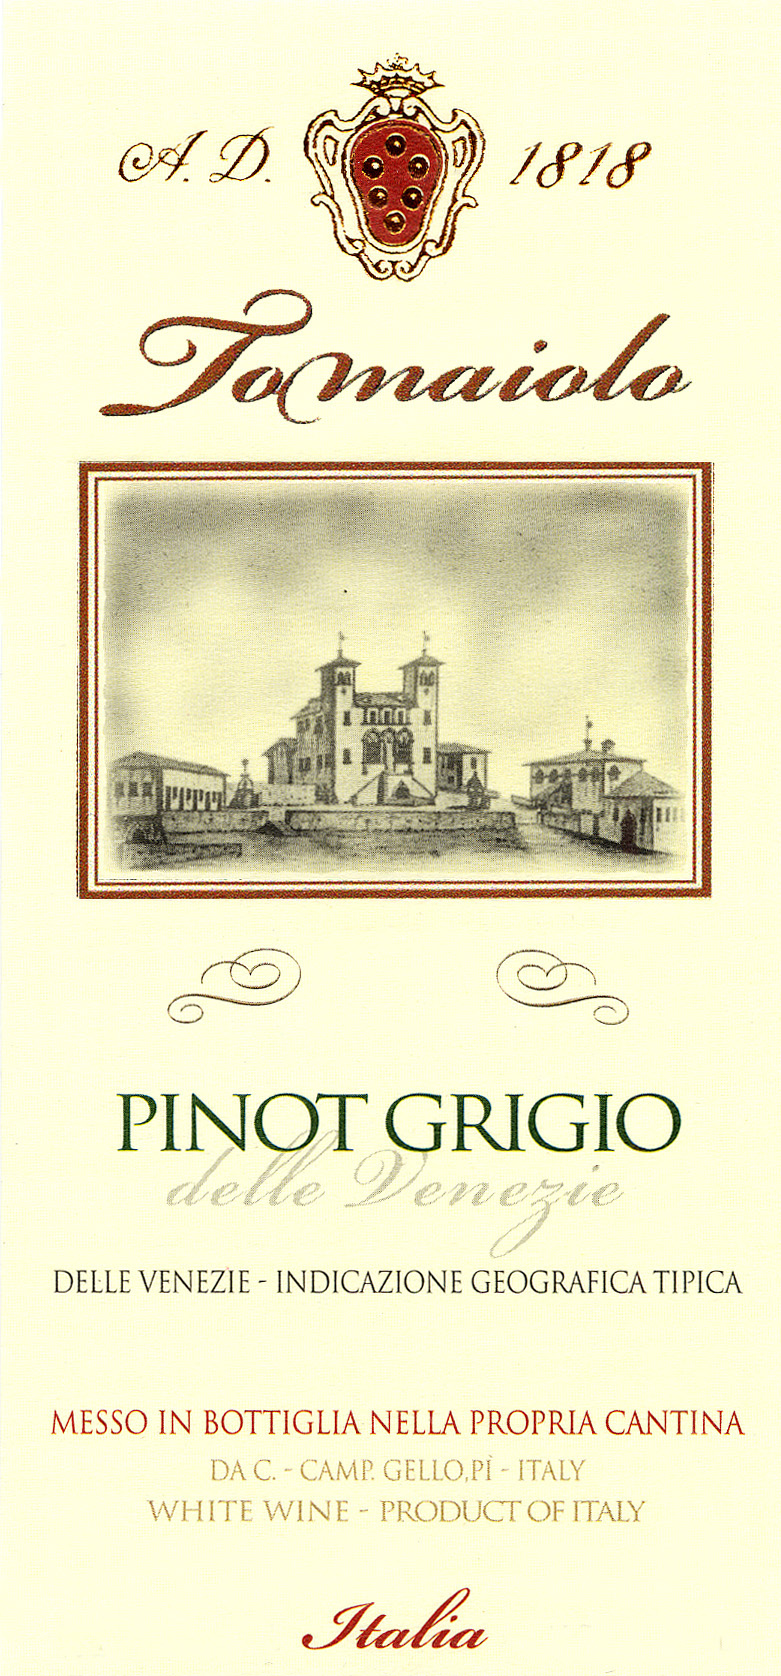 Tomaiolo - Pinot Grigio label